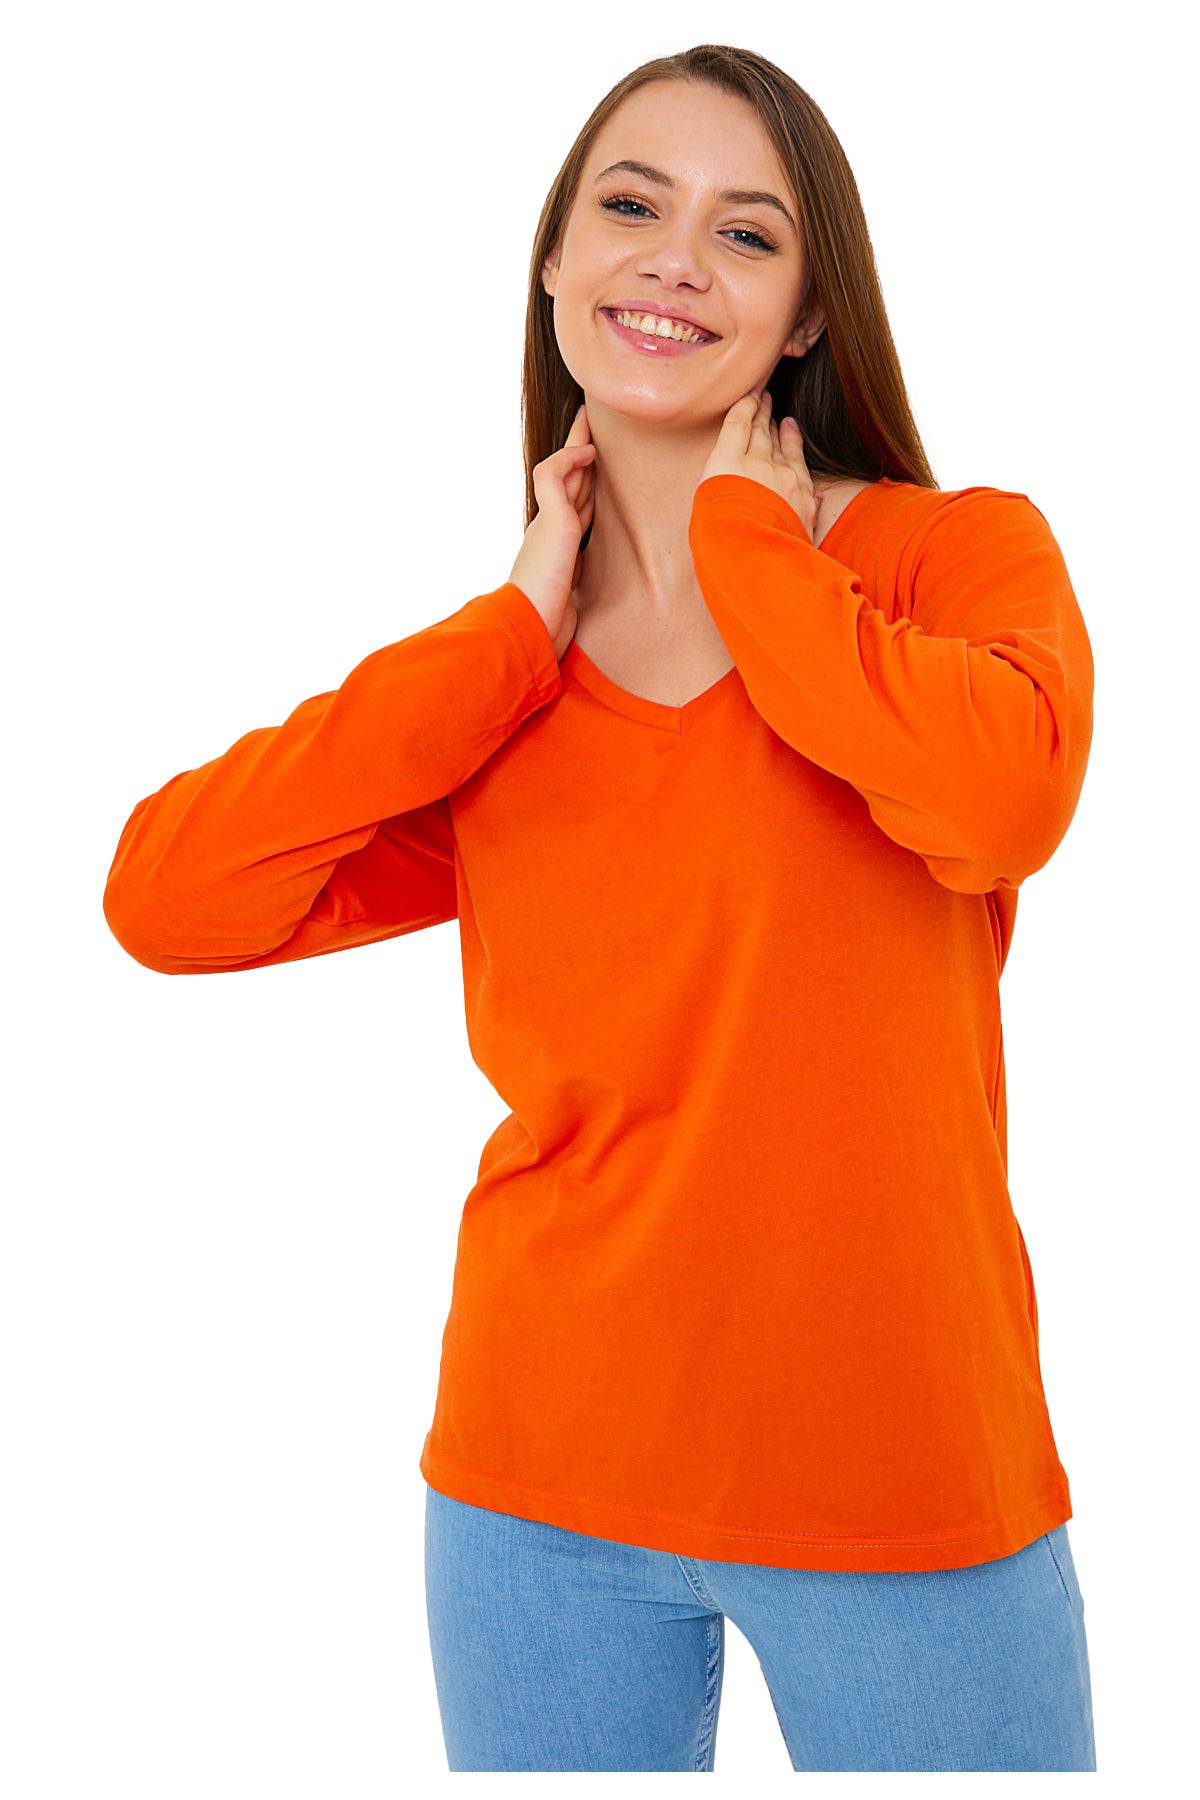 Long Sleeve V-Neck Shirts for Women & Girls - Colorful Pima Cotton-61